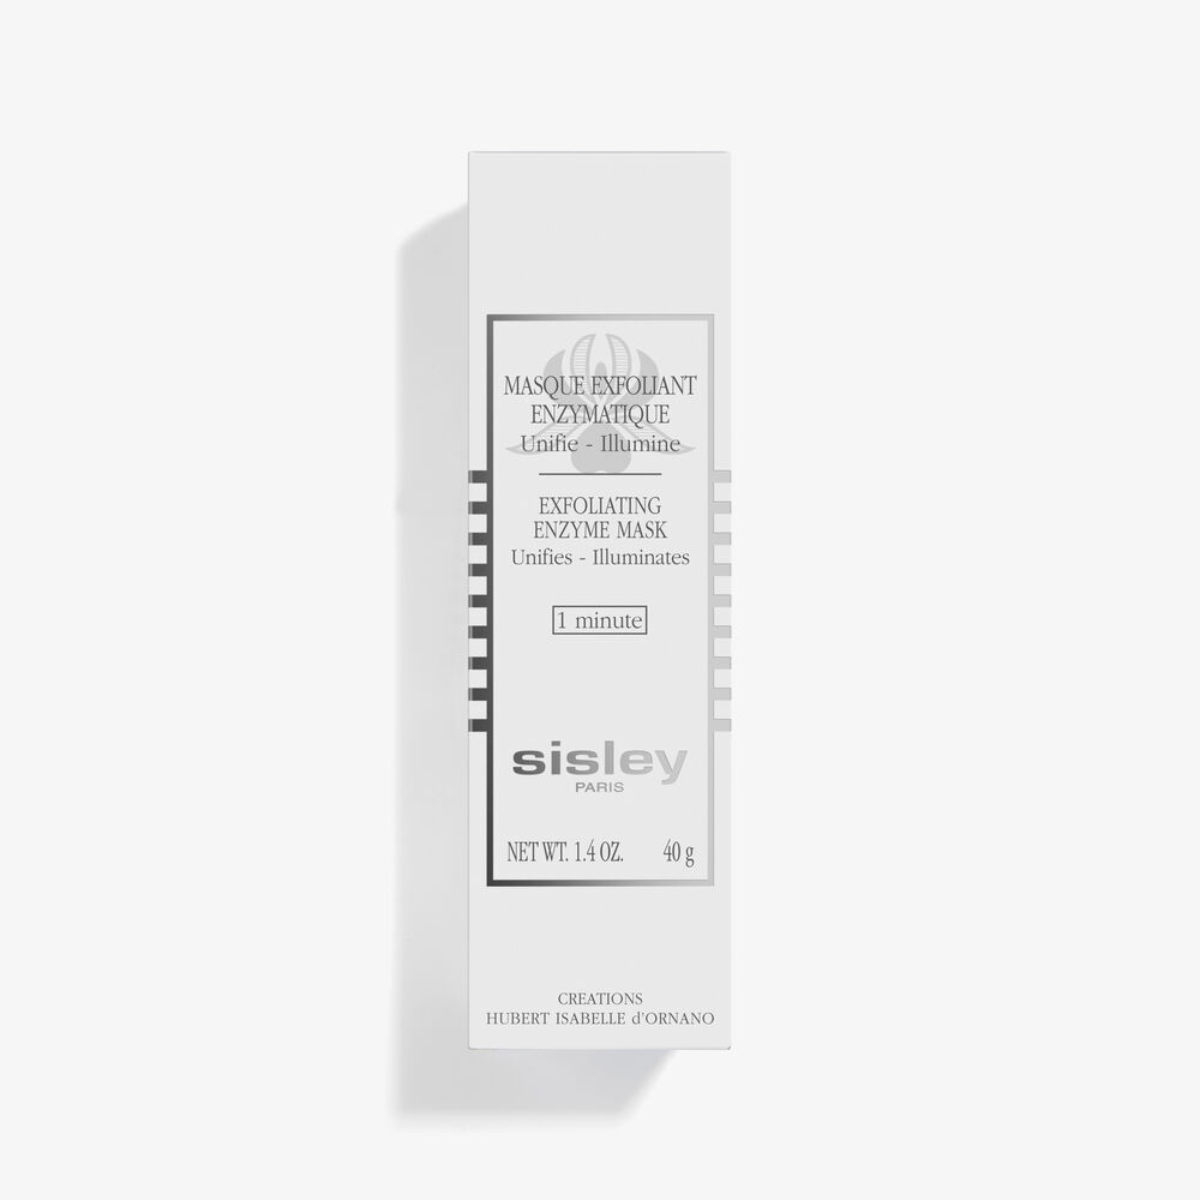 Sisley Paris Masque Exfoliant Enzymatique